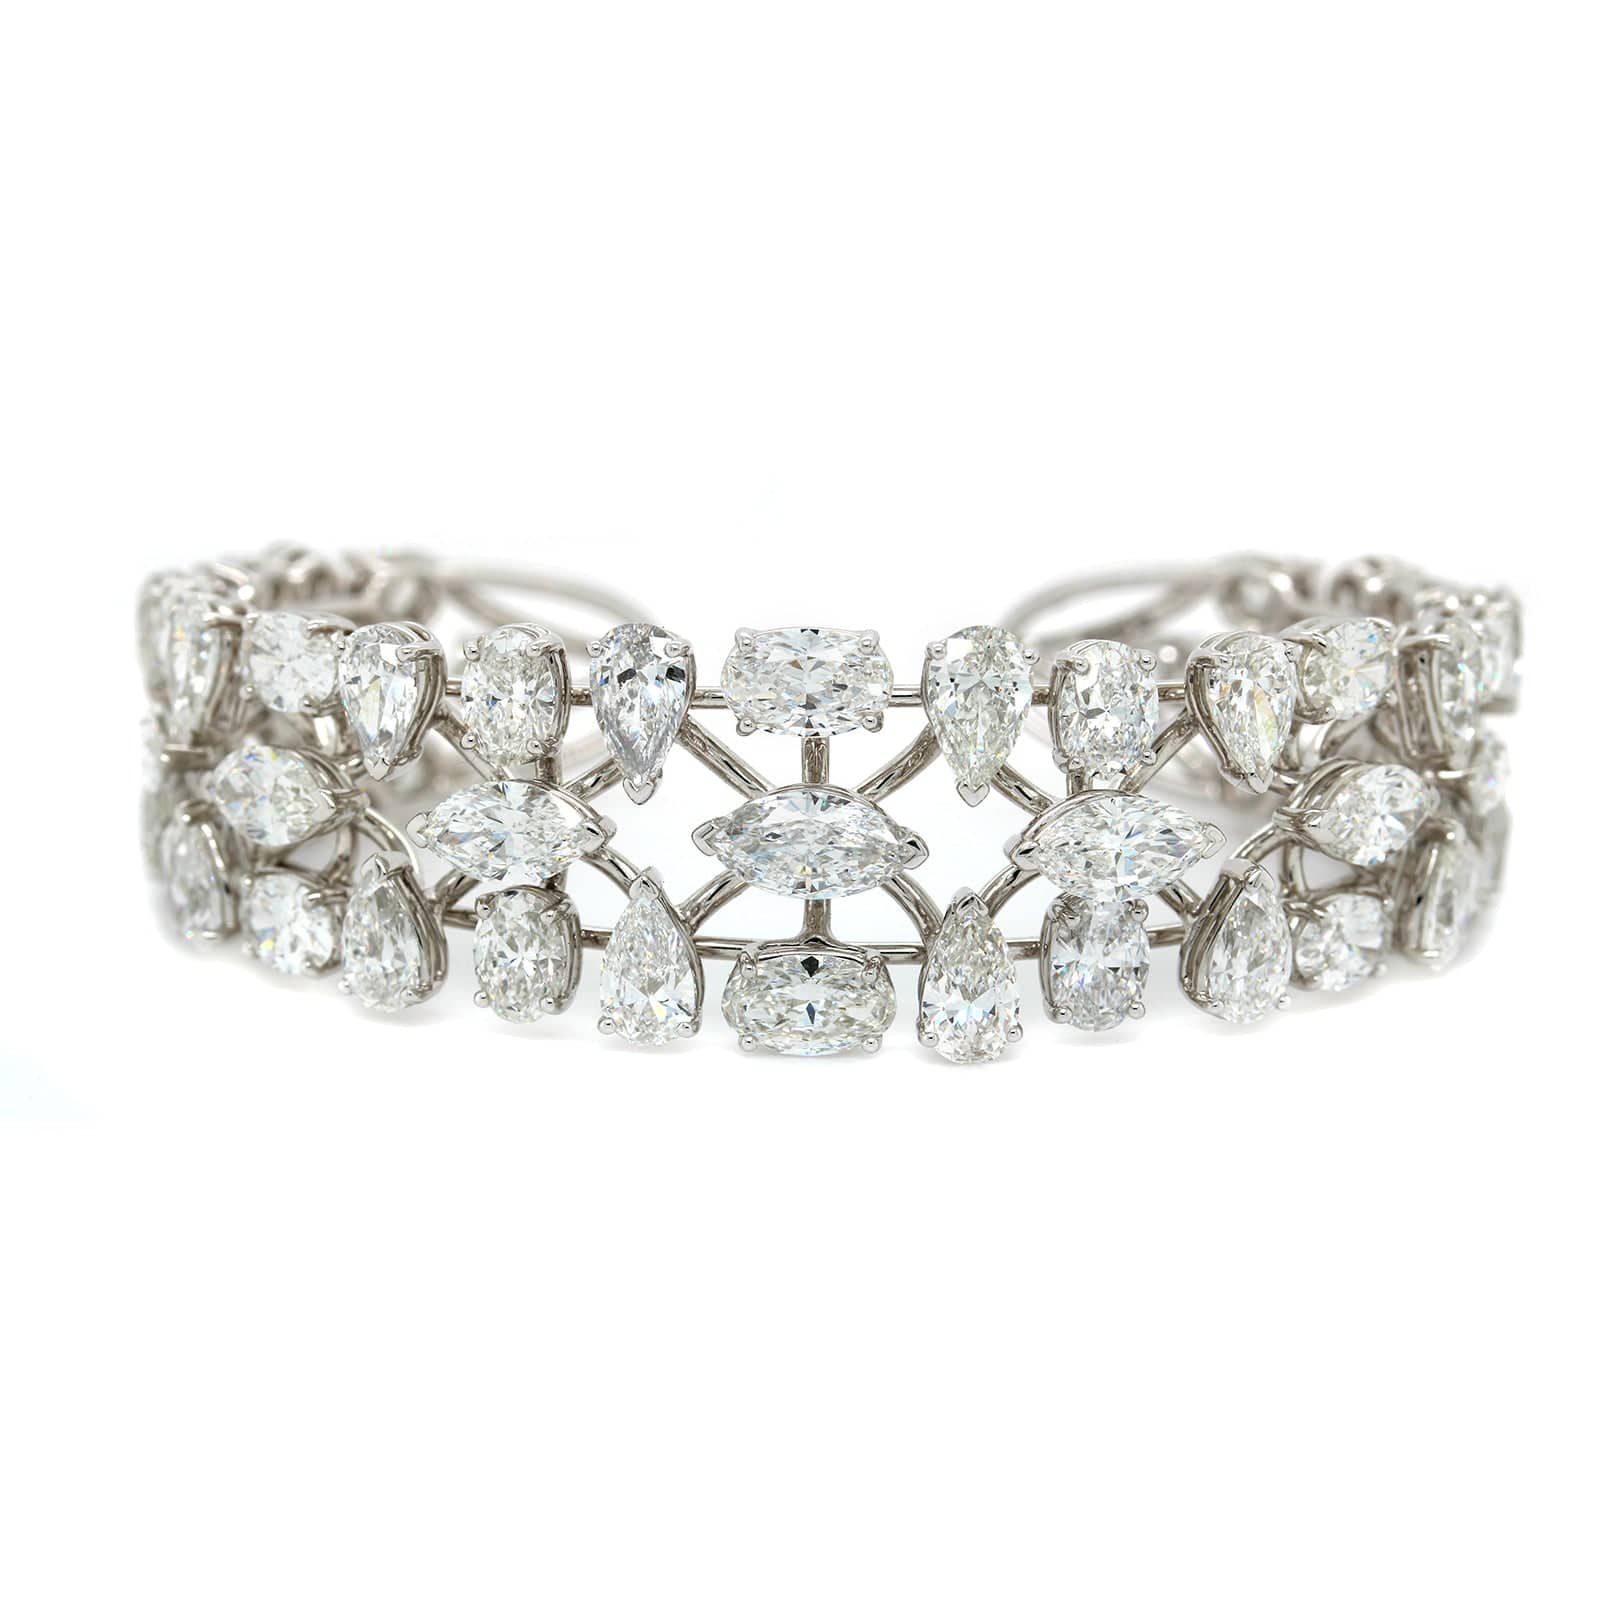 Etho Maria 18K White Gold Diamond Cuff Bracelet